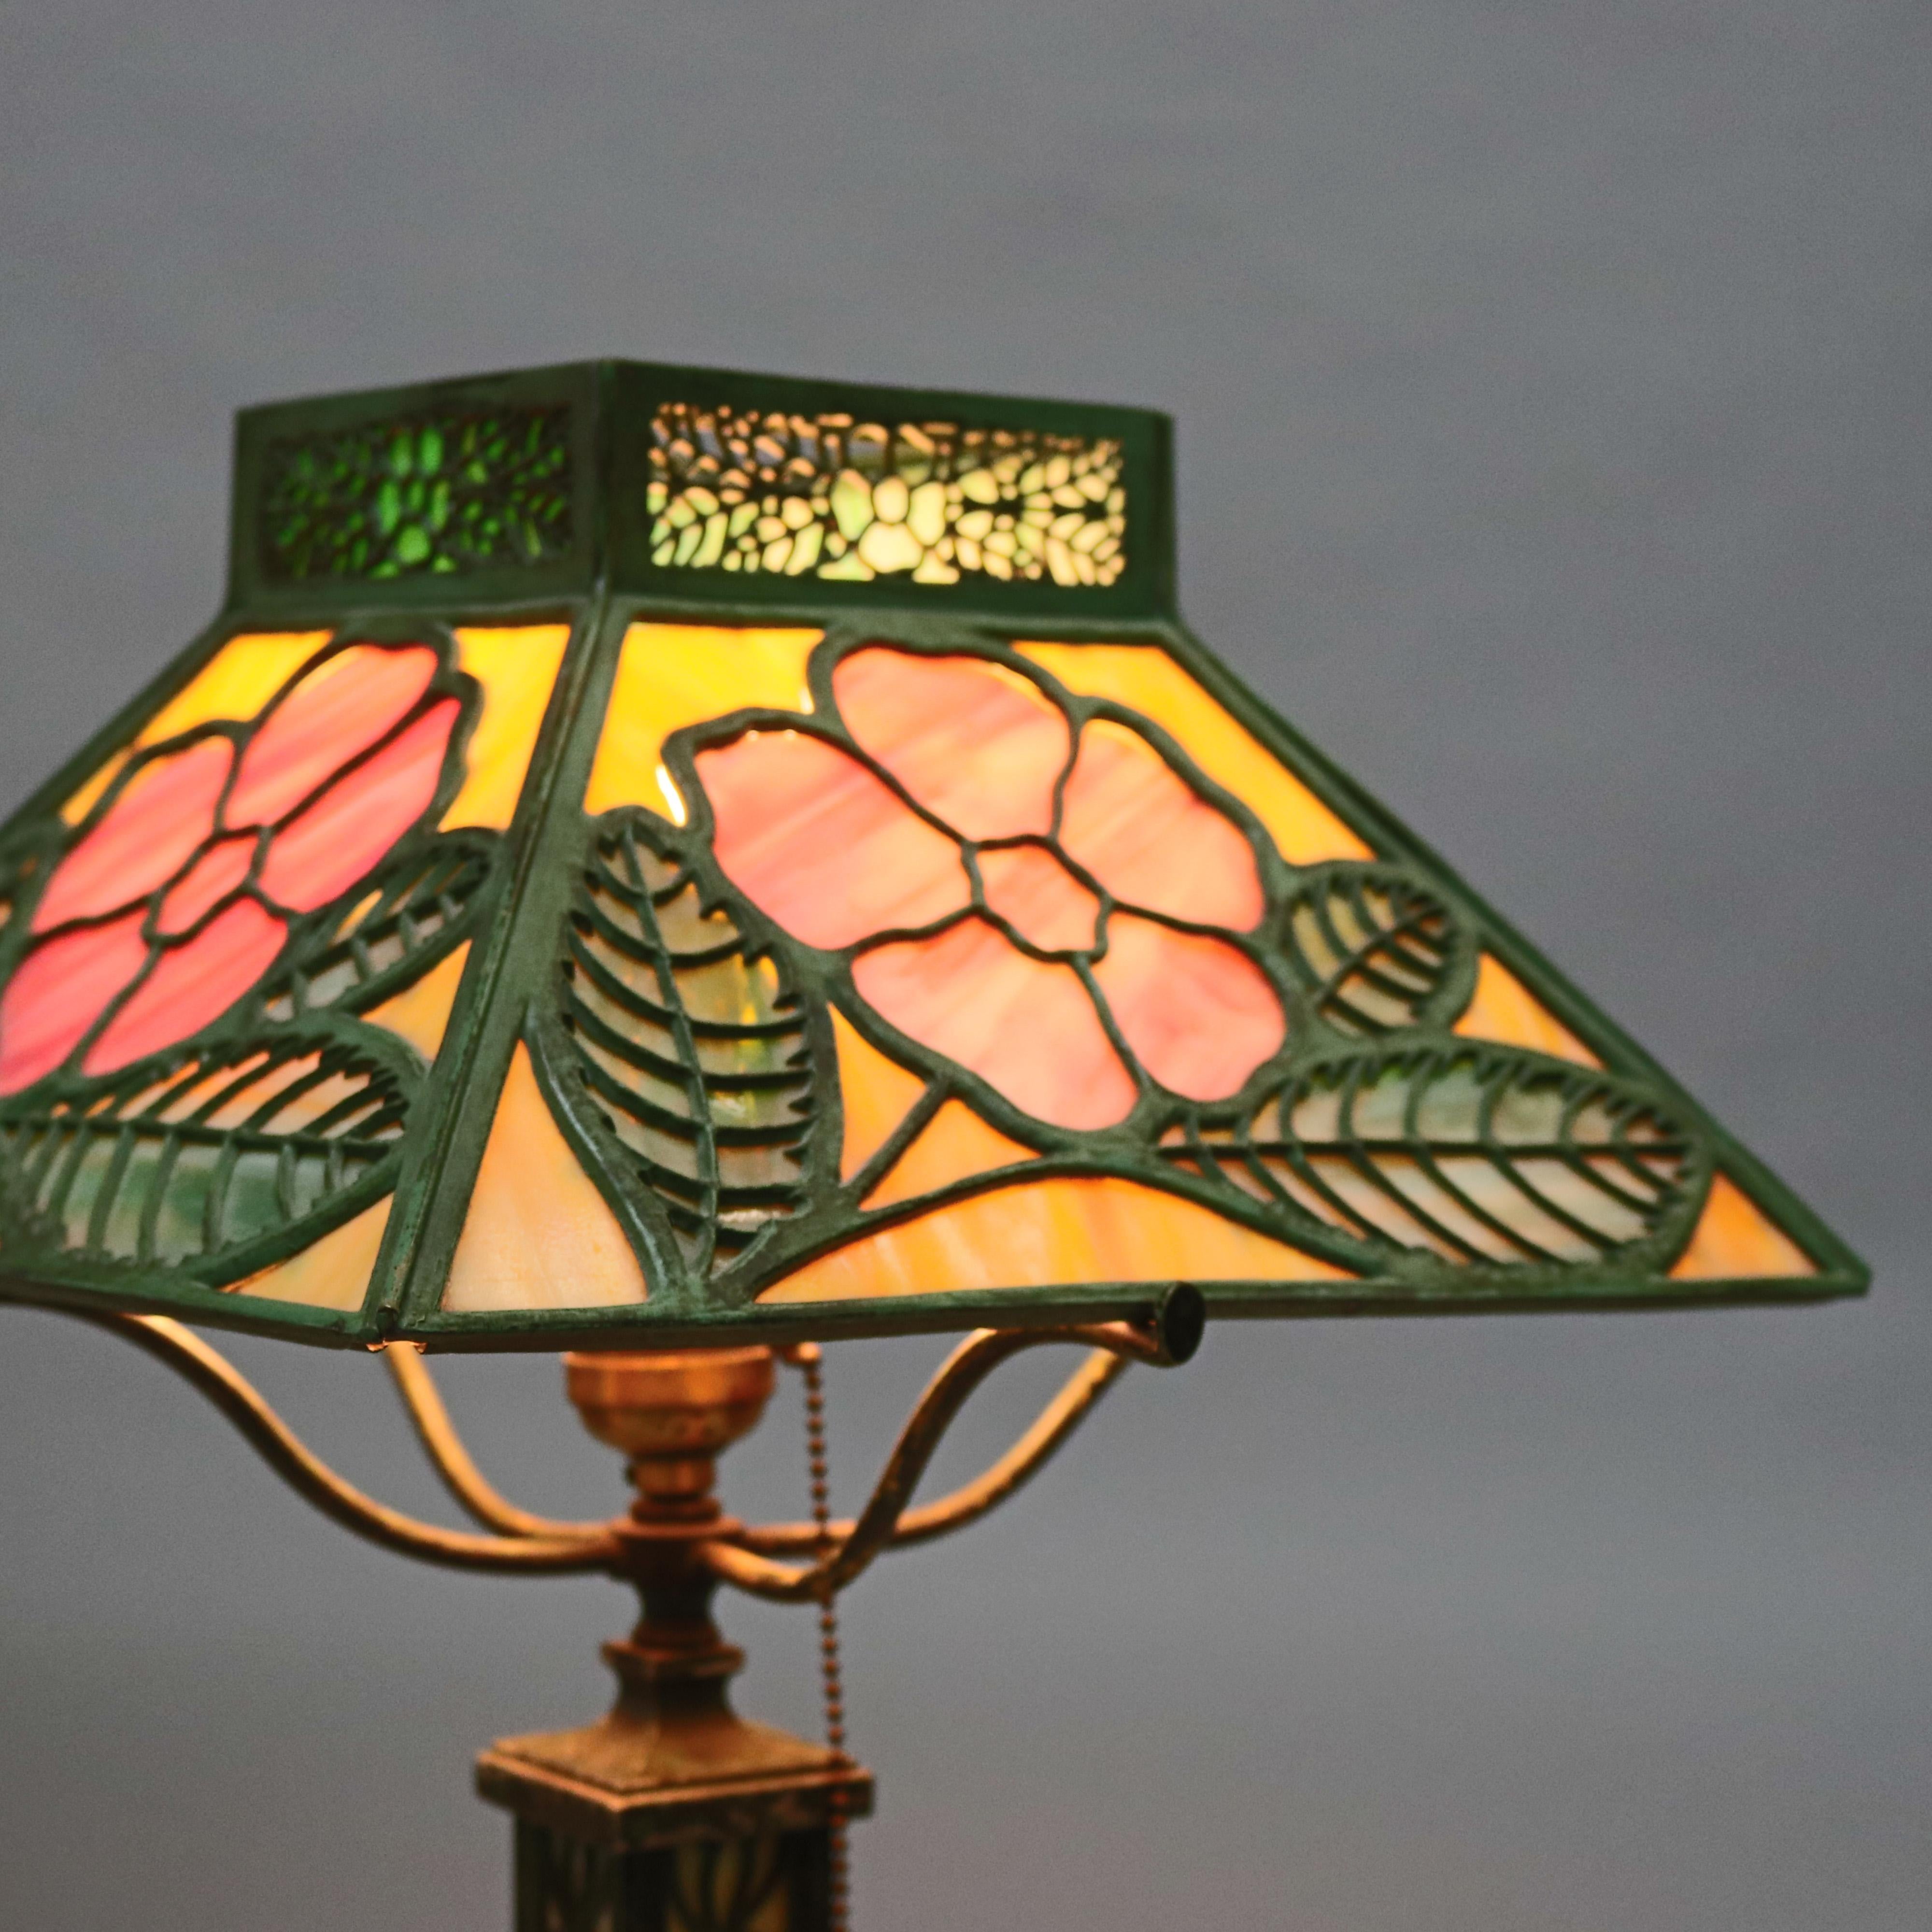 American Antique Bradley & Hubbard Floral Murano Glass Shade Table Lamp, circa 1920